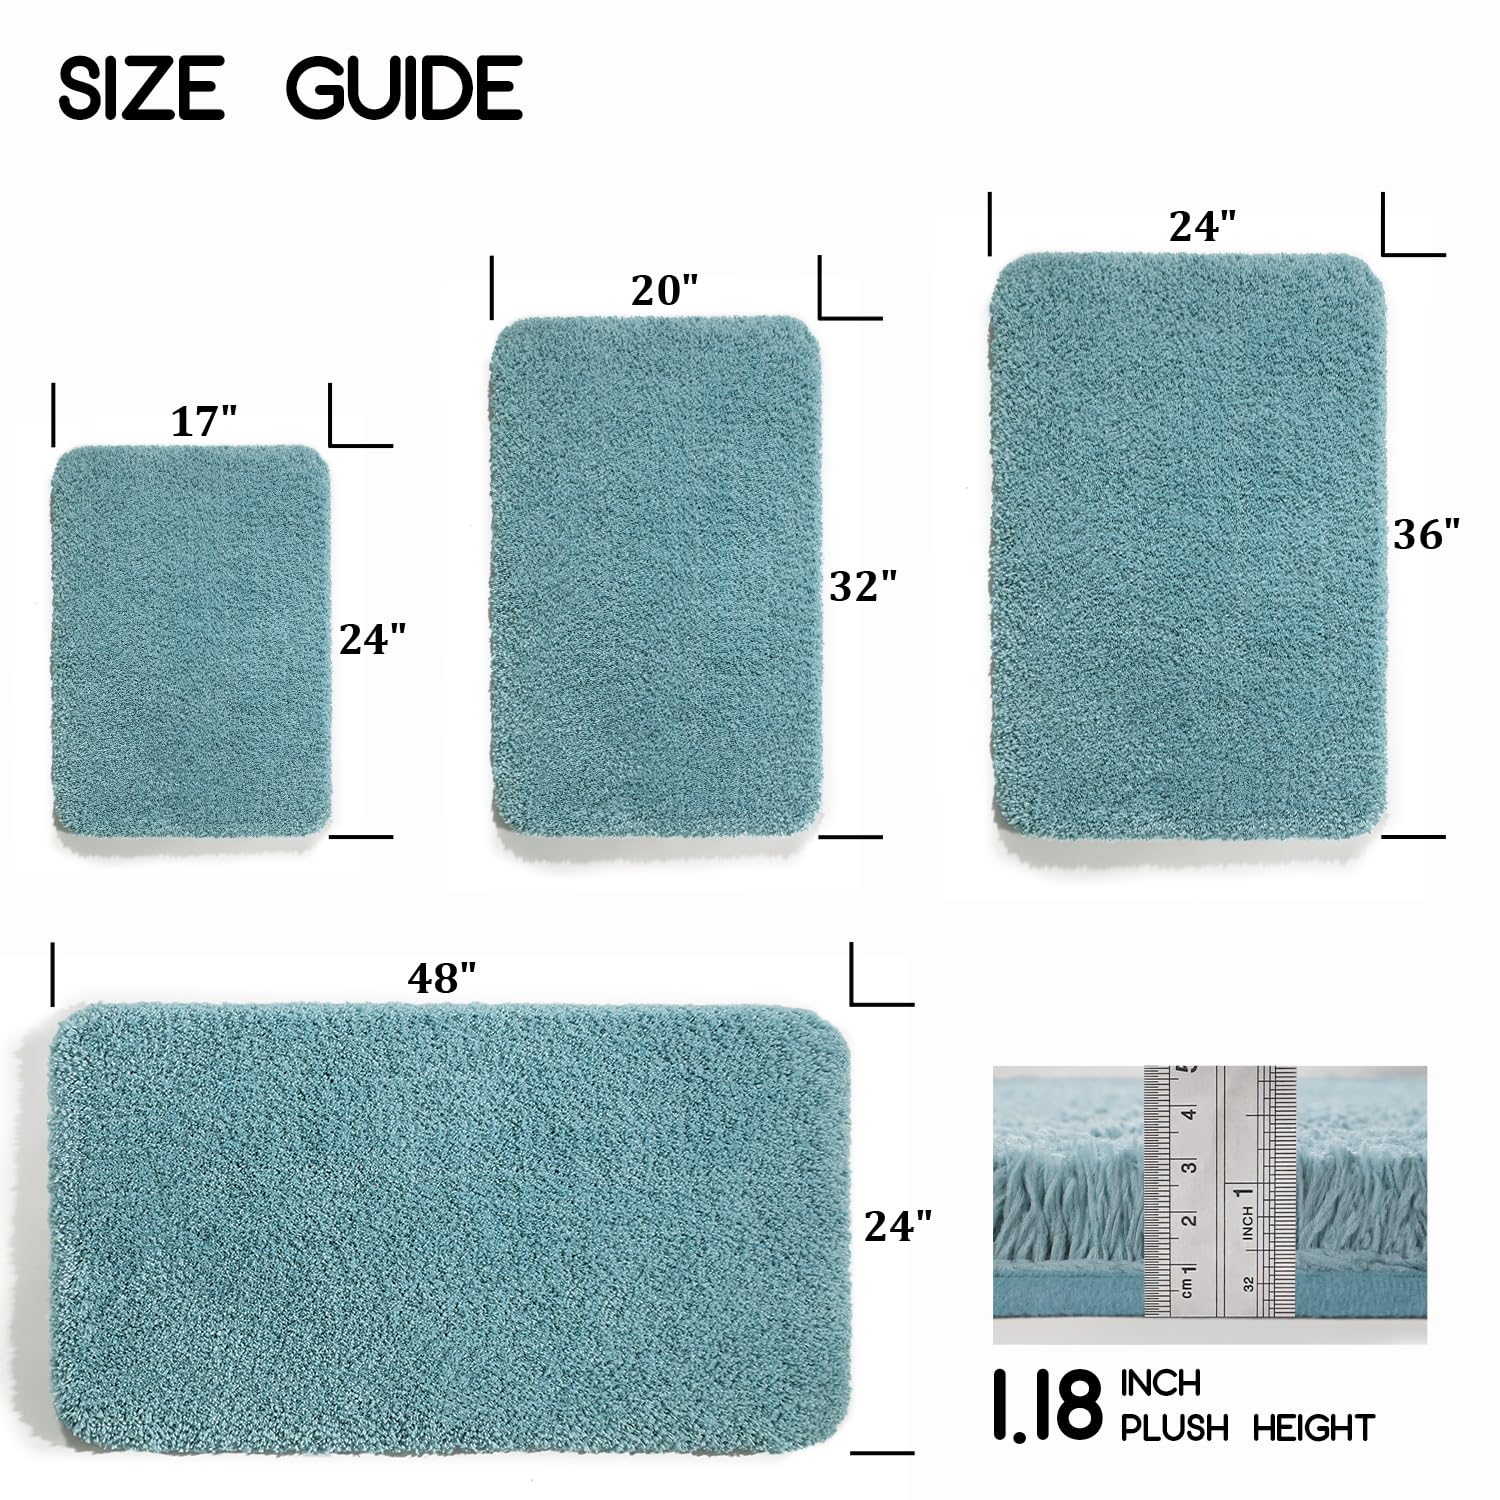 YIHOUSE Thick Microfiber Bathroom Rug Soft Bath Mat for Bathroom Machine Washable Non Slip Absorbent Shower Carpet Rug 17" X 24" Teal